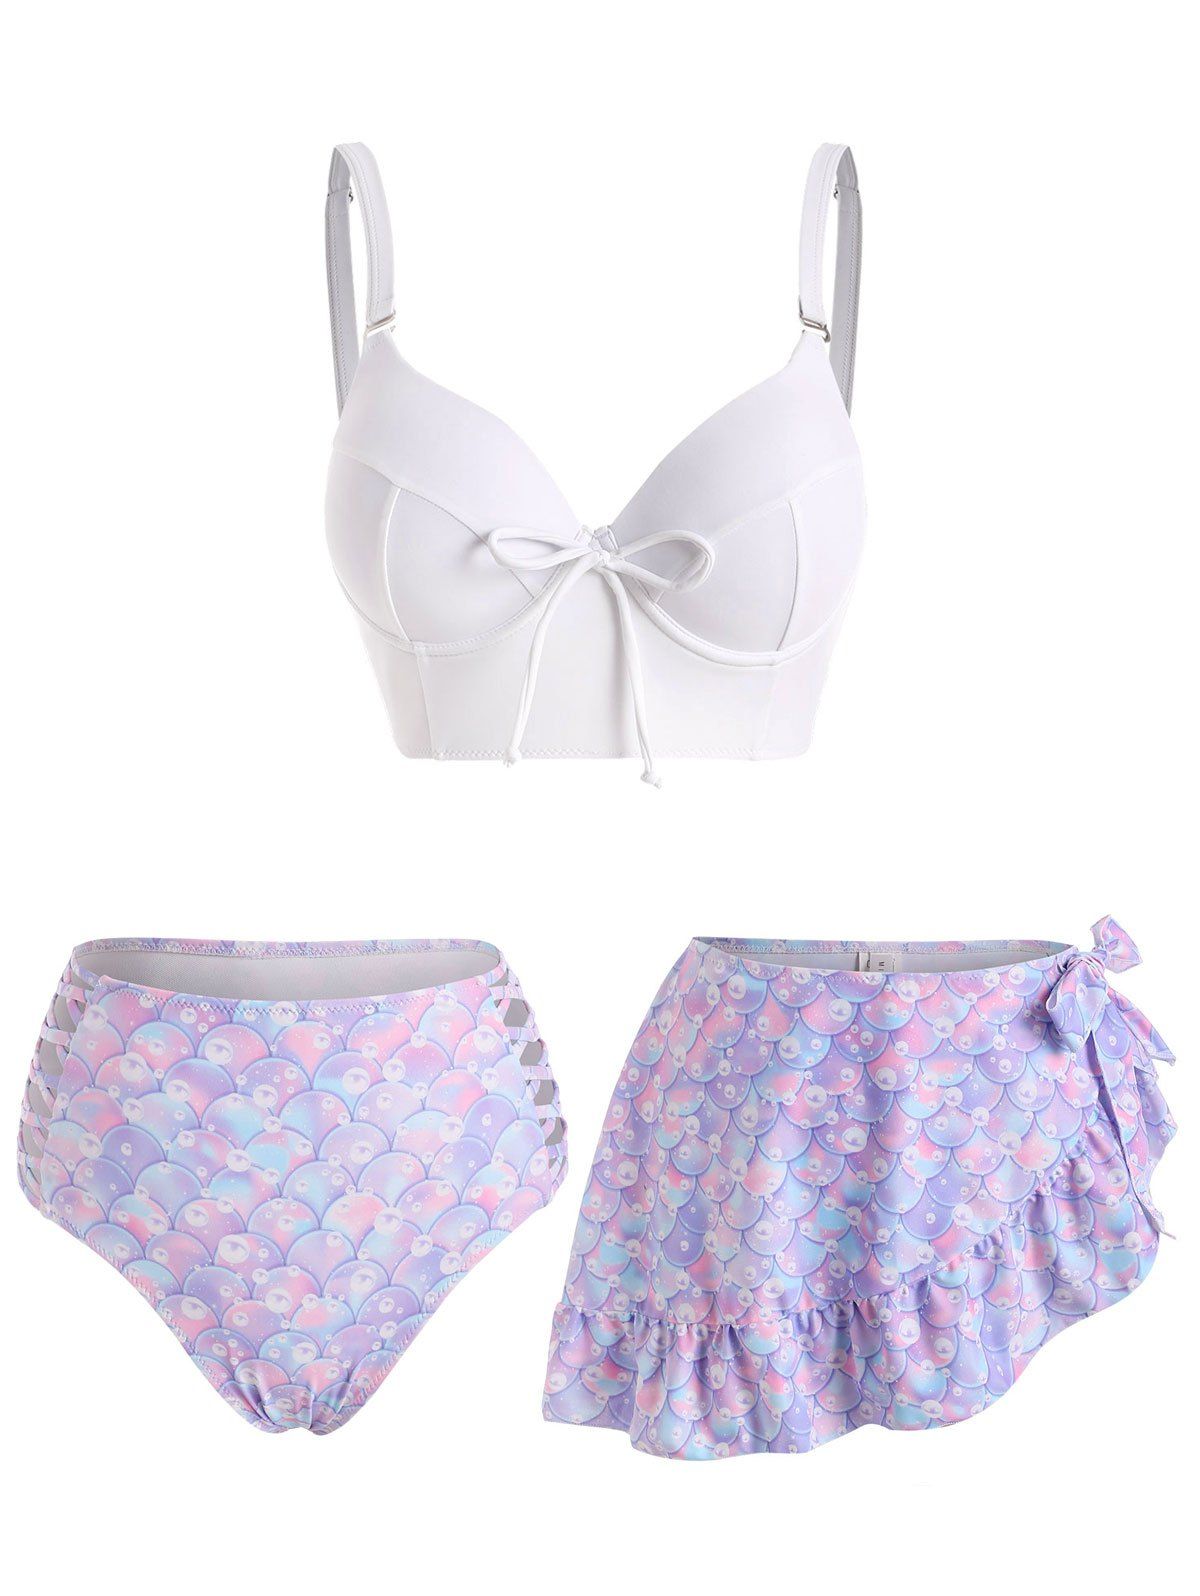 Mermaid Vacay Swimwear Criss Cross Bowknot Underwire Push Up Asymmetrical Hem Skirt Three Piece Tankini Swimwear - WHITE S